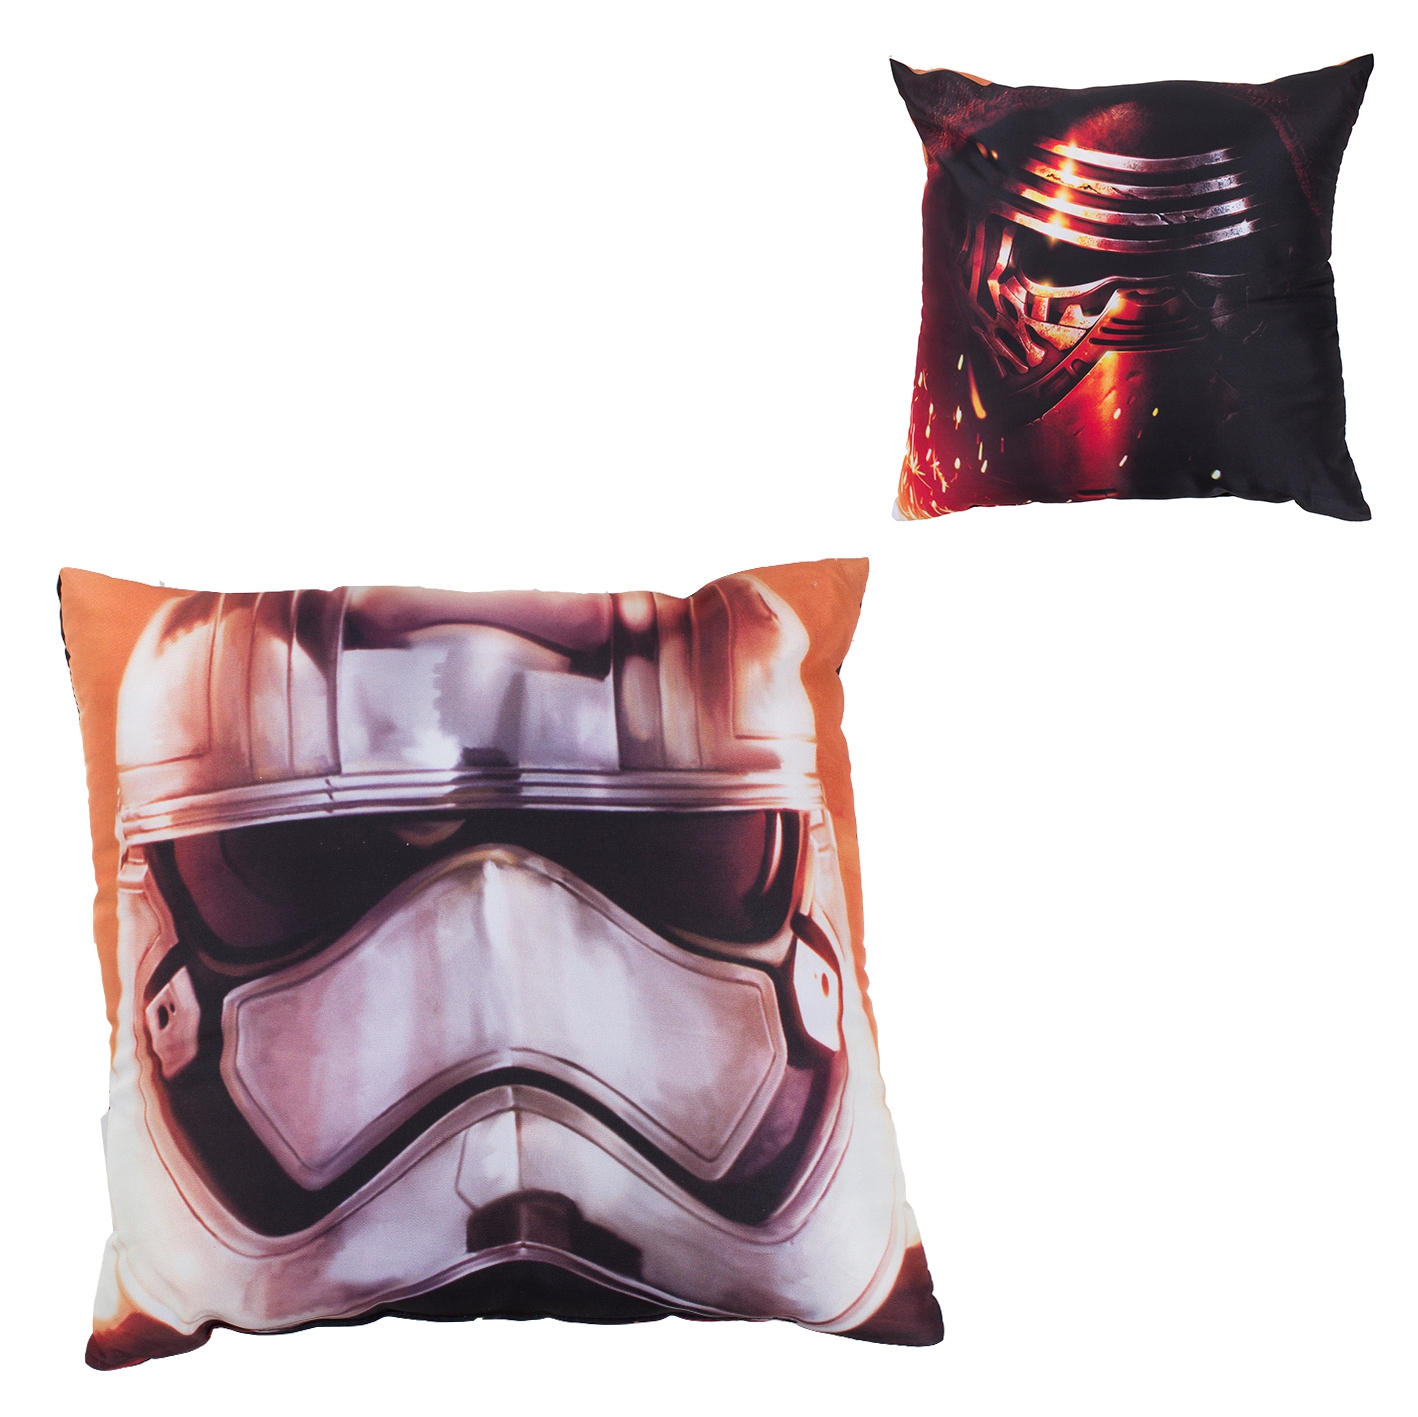 Star Wars Cushion 'The Force Awakens' Printed